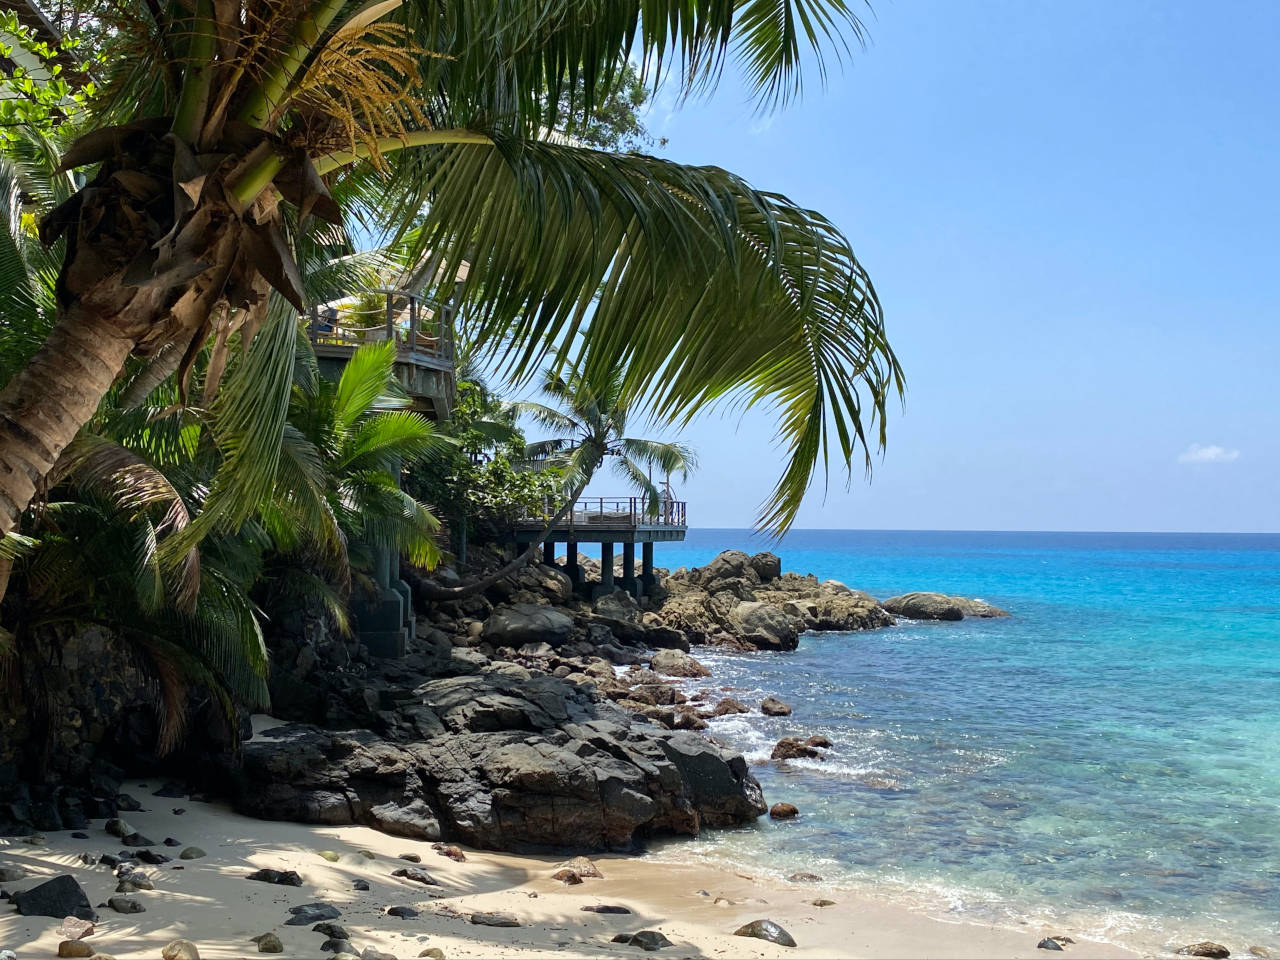 Seychelles Yacht Charter: Exploring Enchanting Destinations in Luxury